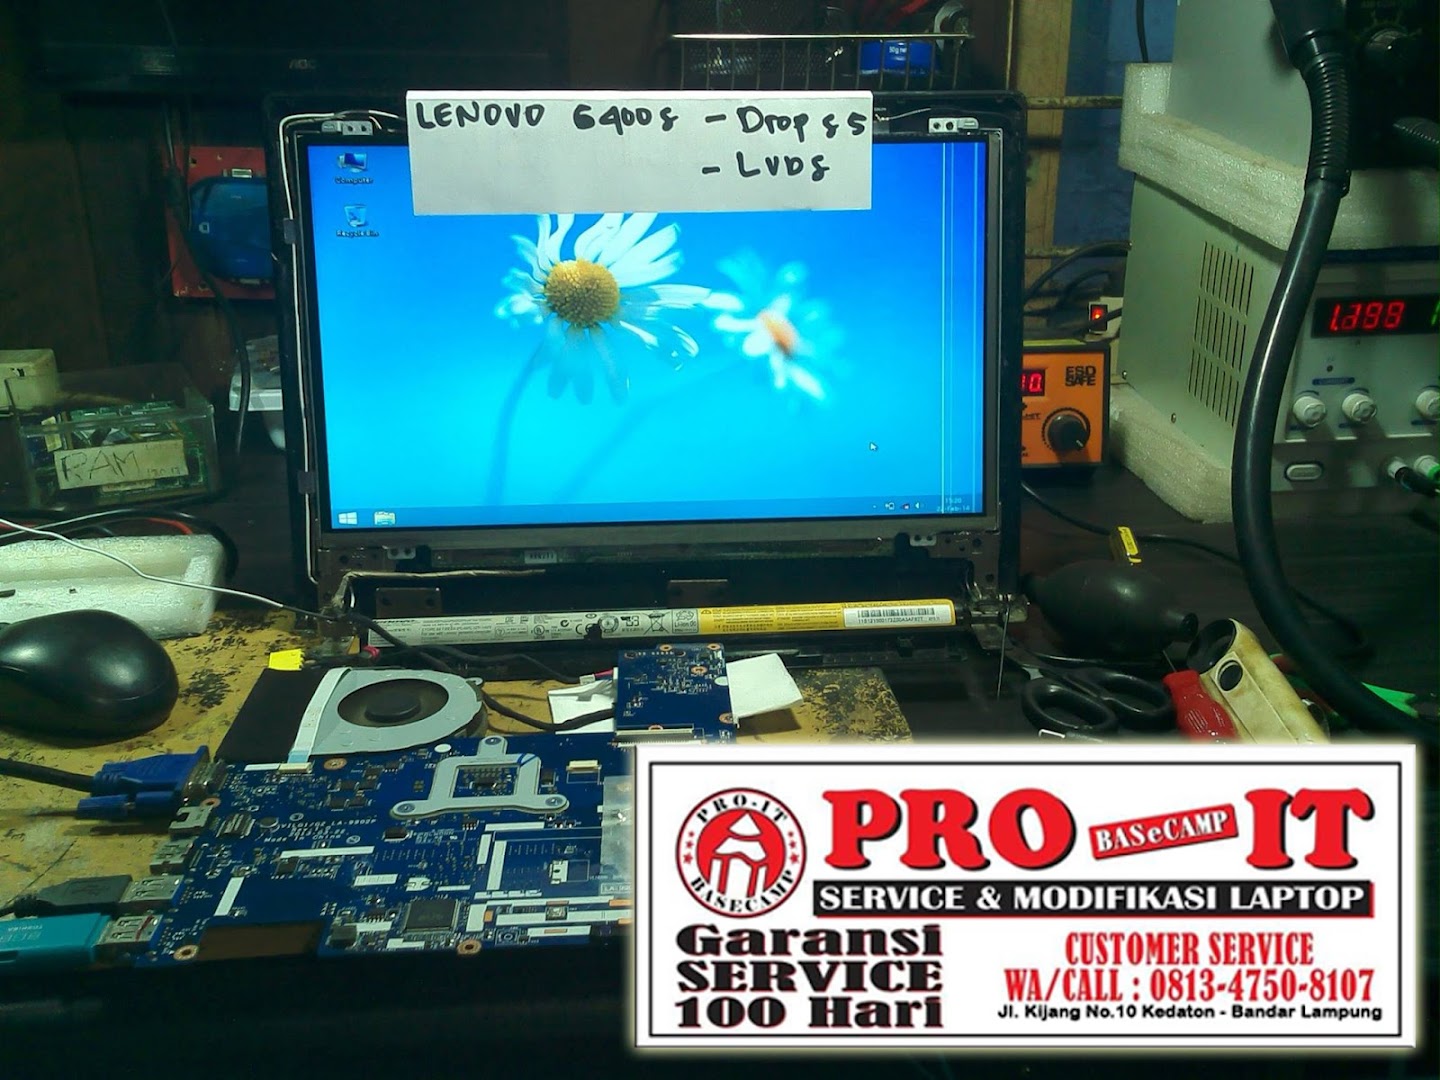 Gambar Pro-it Service Laptop